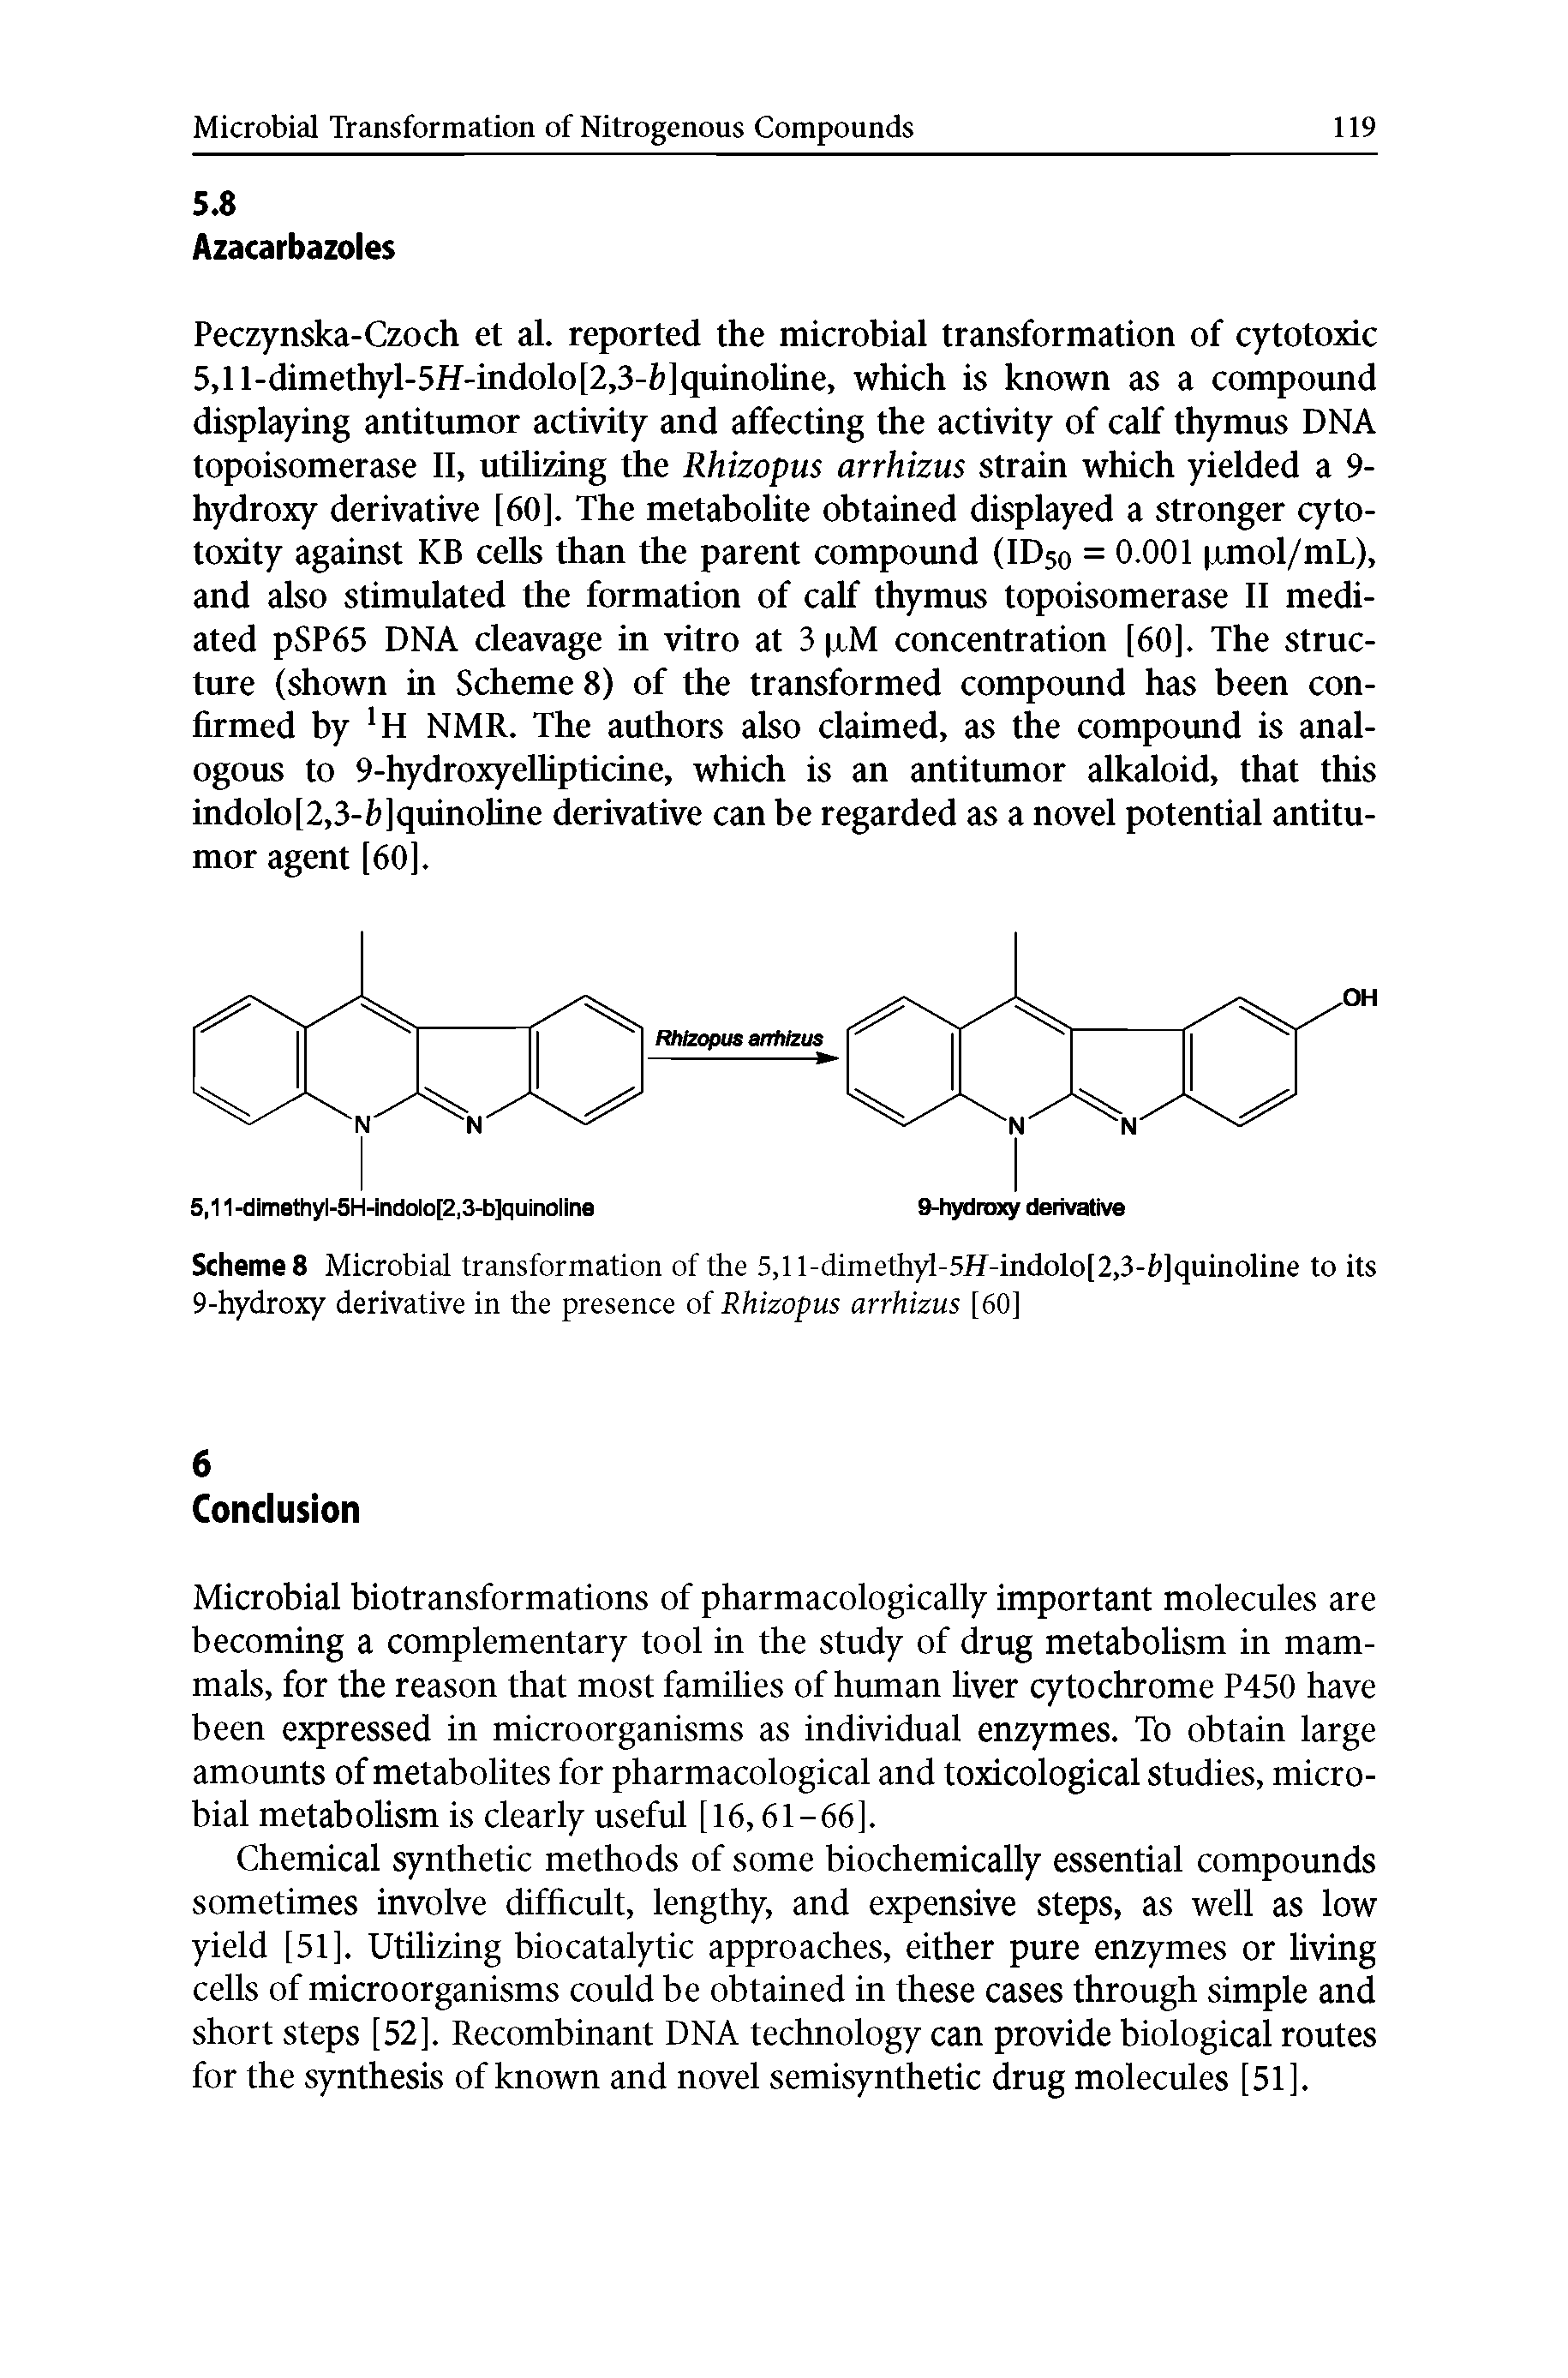 Schemes Microbial transformation of the 5,ll-dimethyl-5ff-indolo[2,3-lt]quinoline to its 9-hydroxy derivative in the presence of Rhizopus arrhizus [60]...